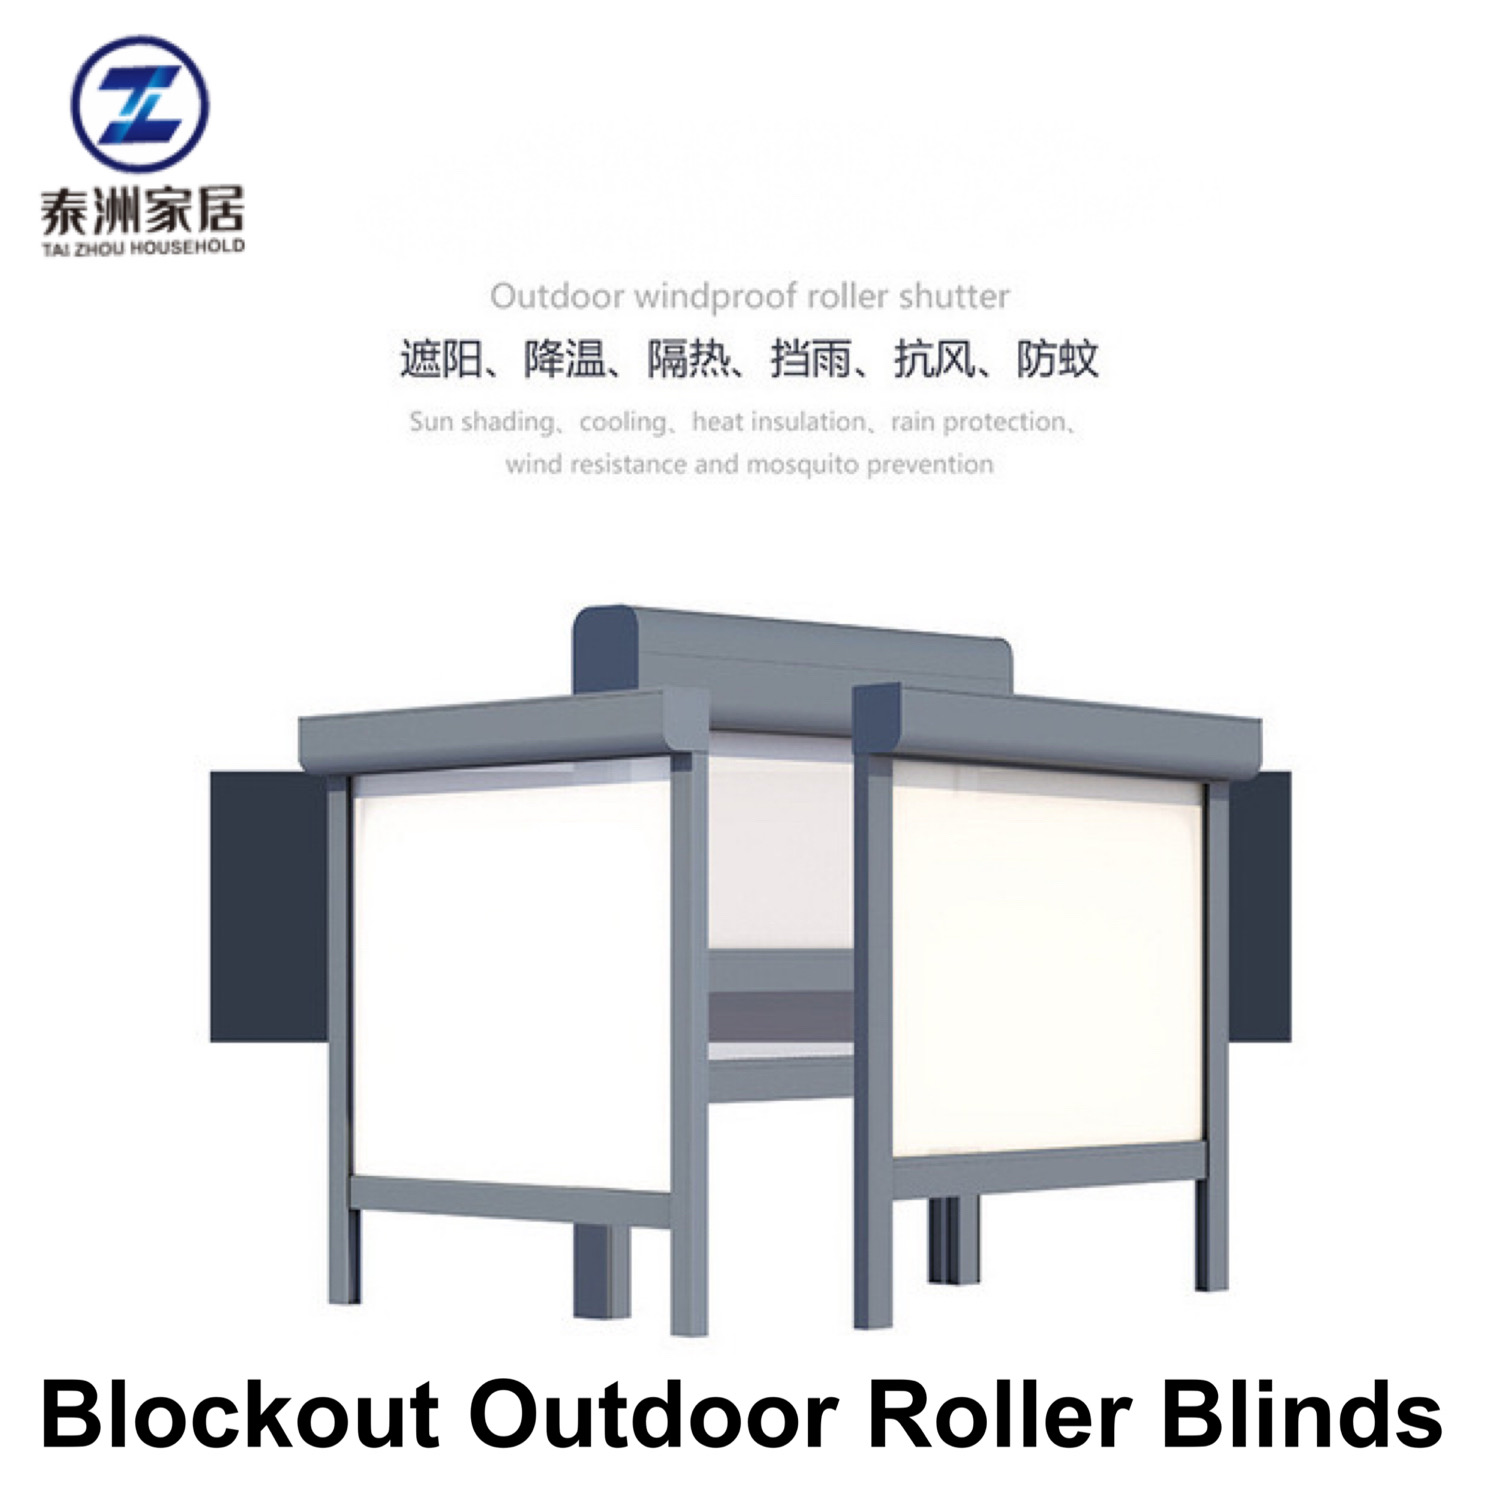 90% Blockout Outdoor Roller Blinds